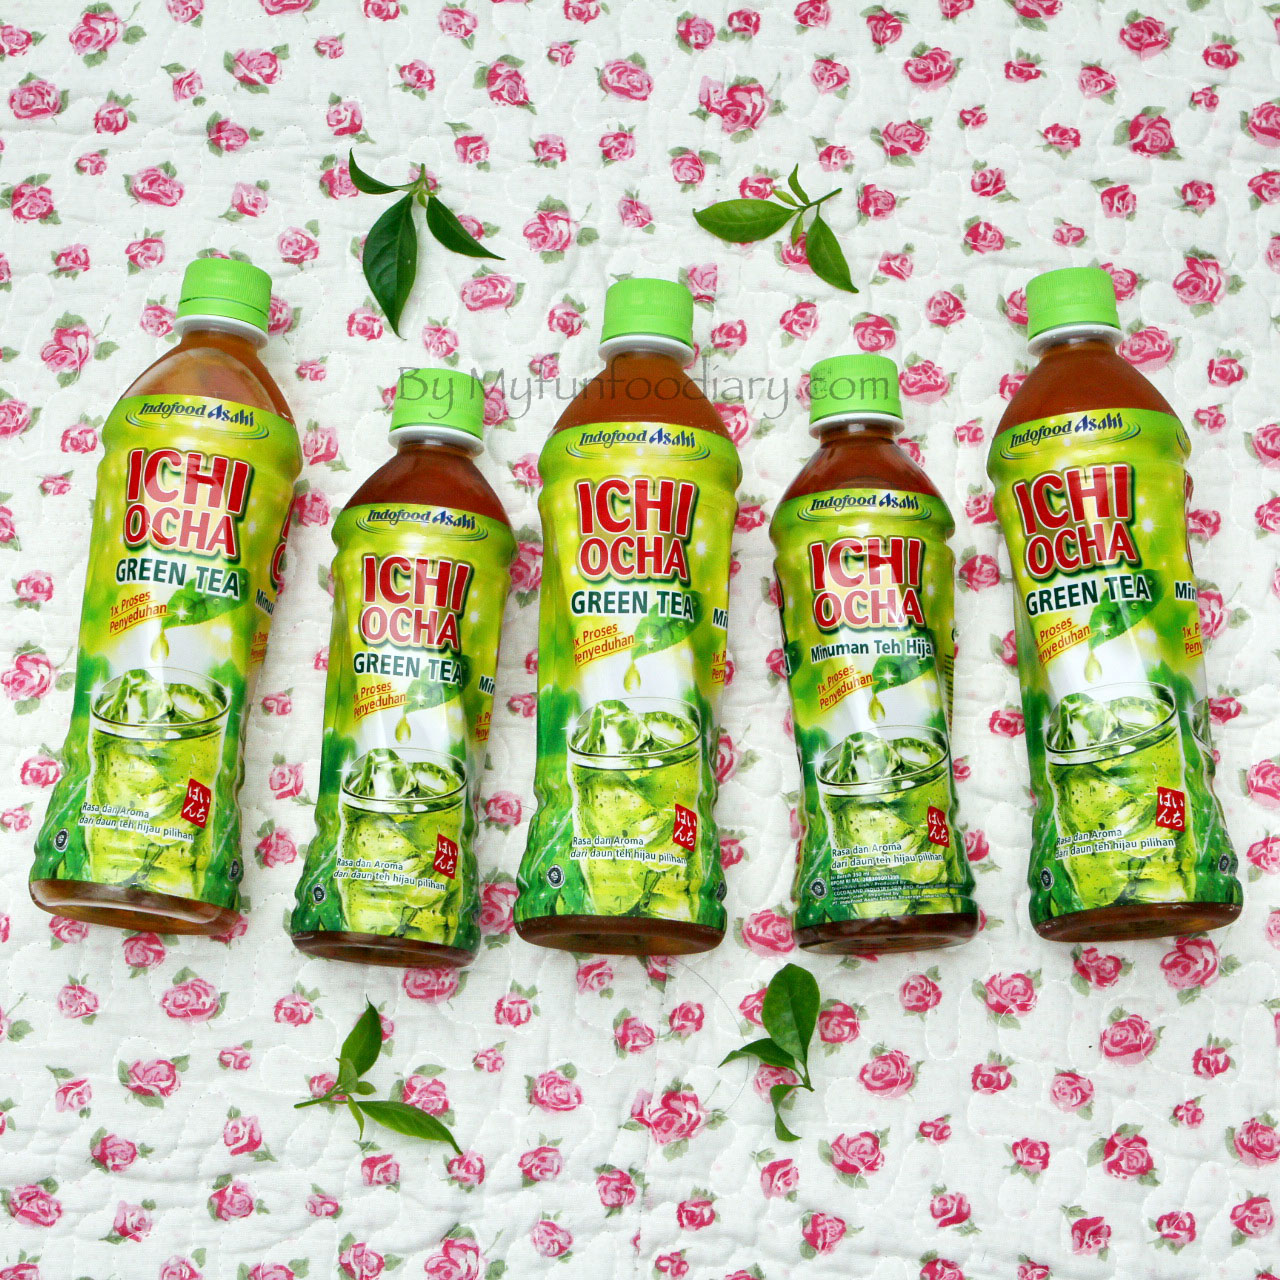 [NEW POST] Freshness Japanese Green Tea from Ichi Ocha | myfunfoodiary.com